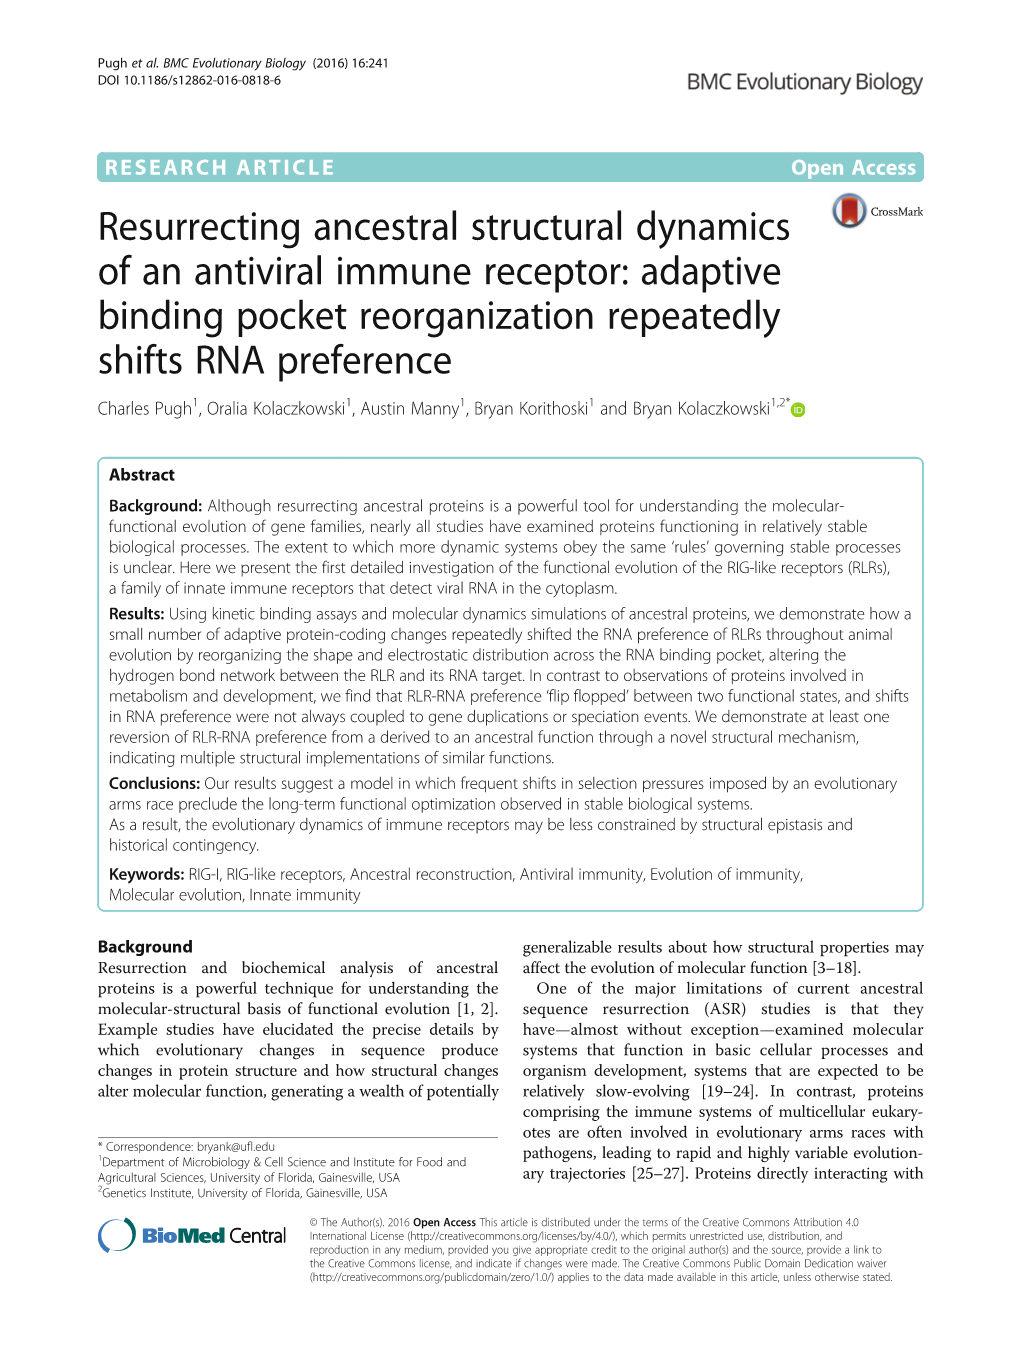 Resurrecting Ancestral Structural Dynamics of an Antiviral Immune